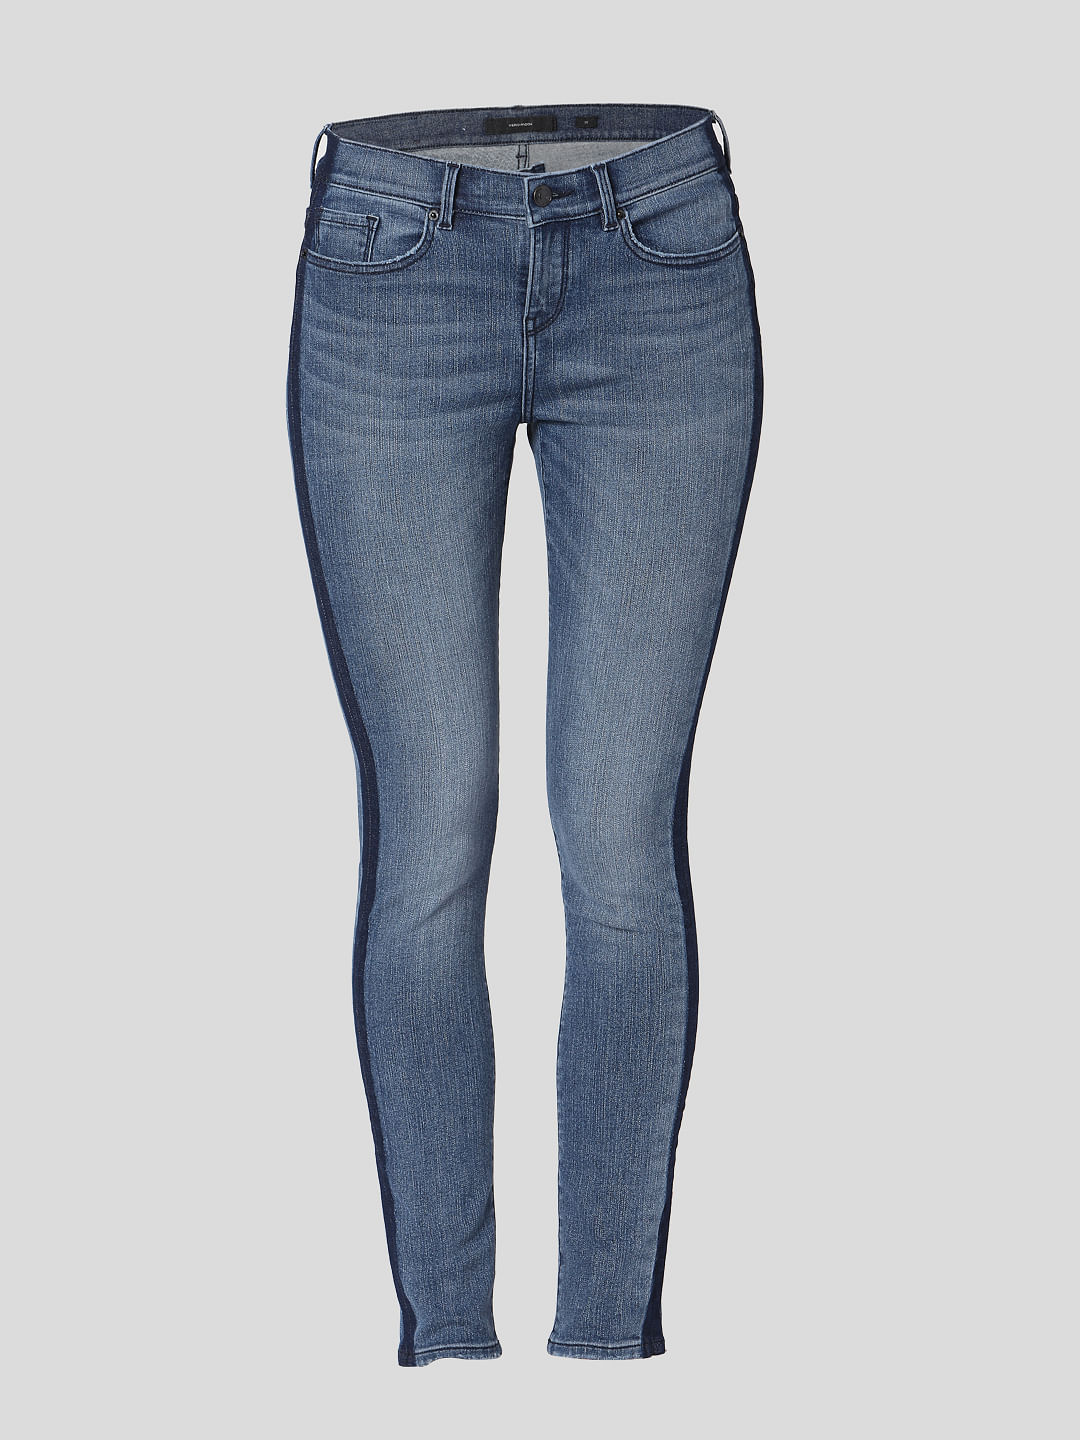 Mango flared jeans Blue 34                  EU discount 94% WOMEN FASHION Jeans Strech 